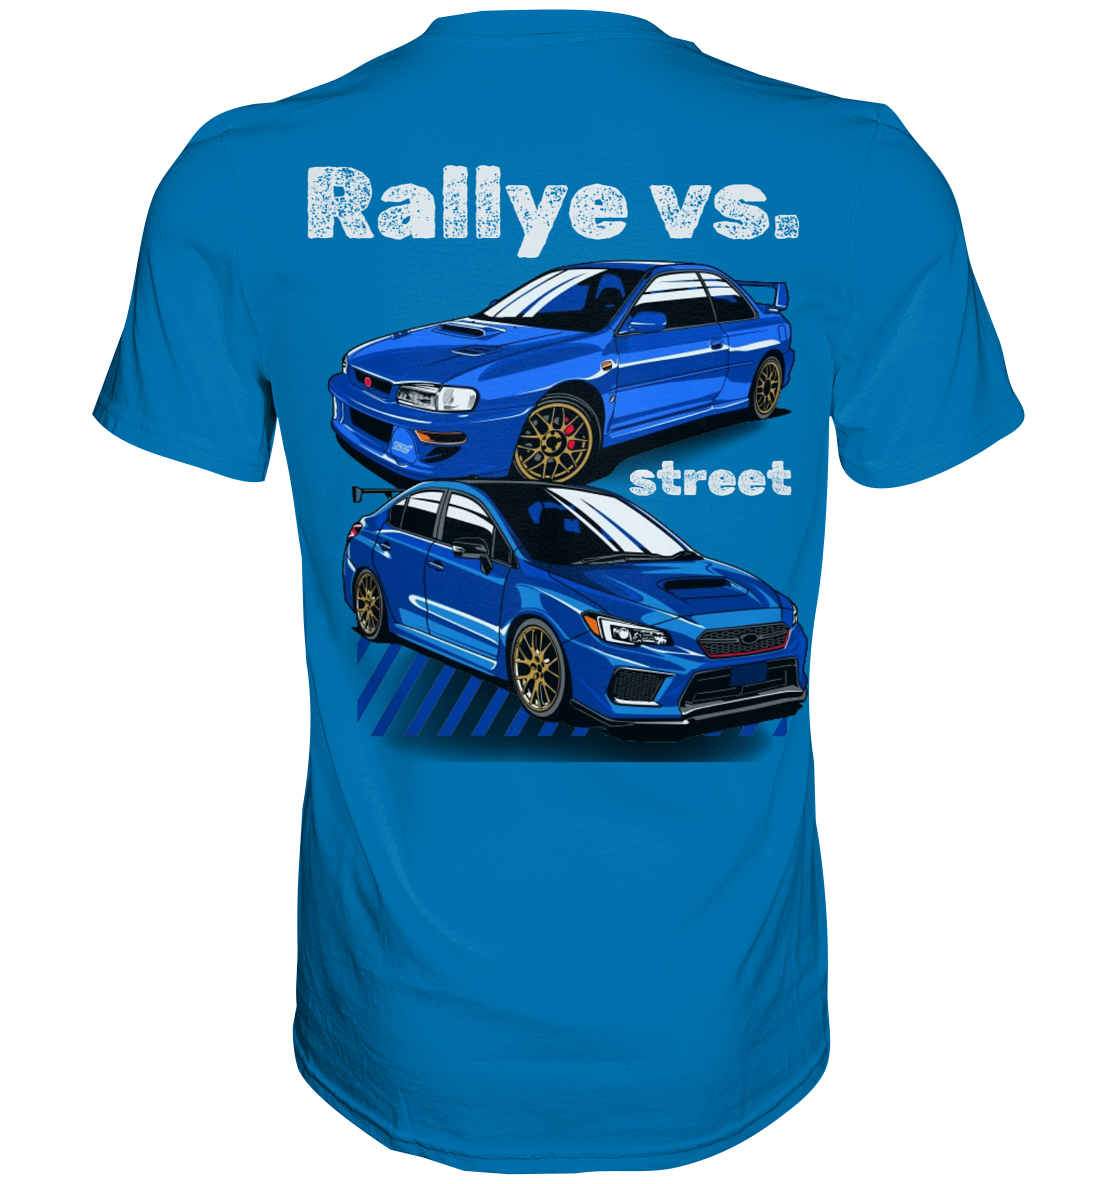 Rallye vs. Street WRX - Premium Shirt